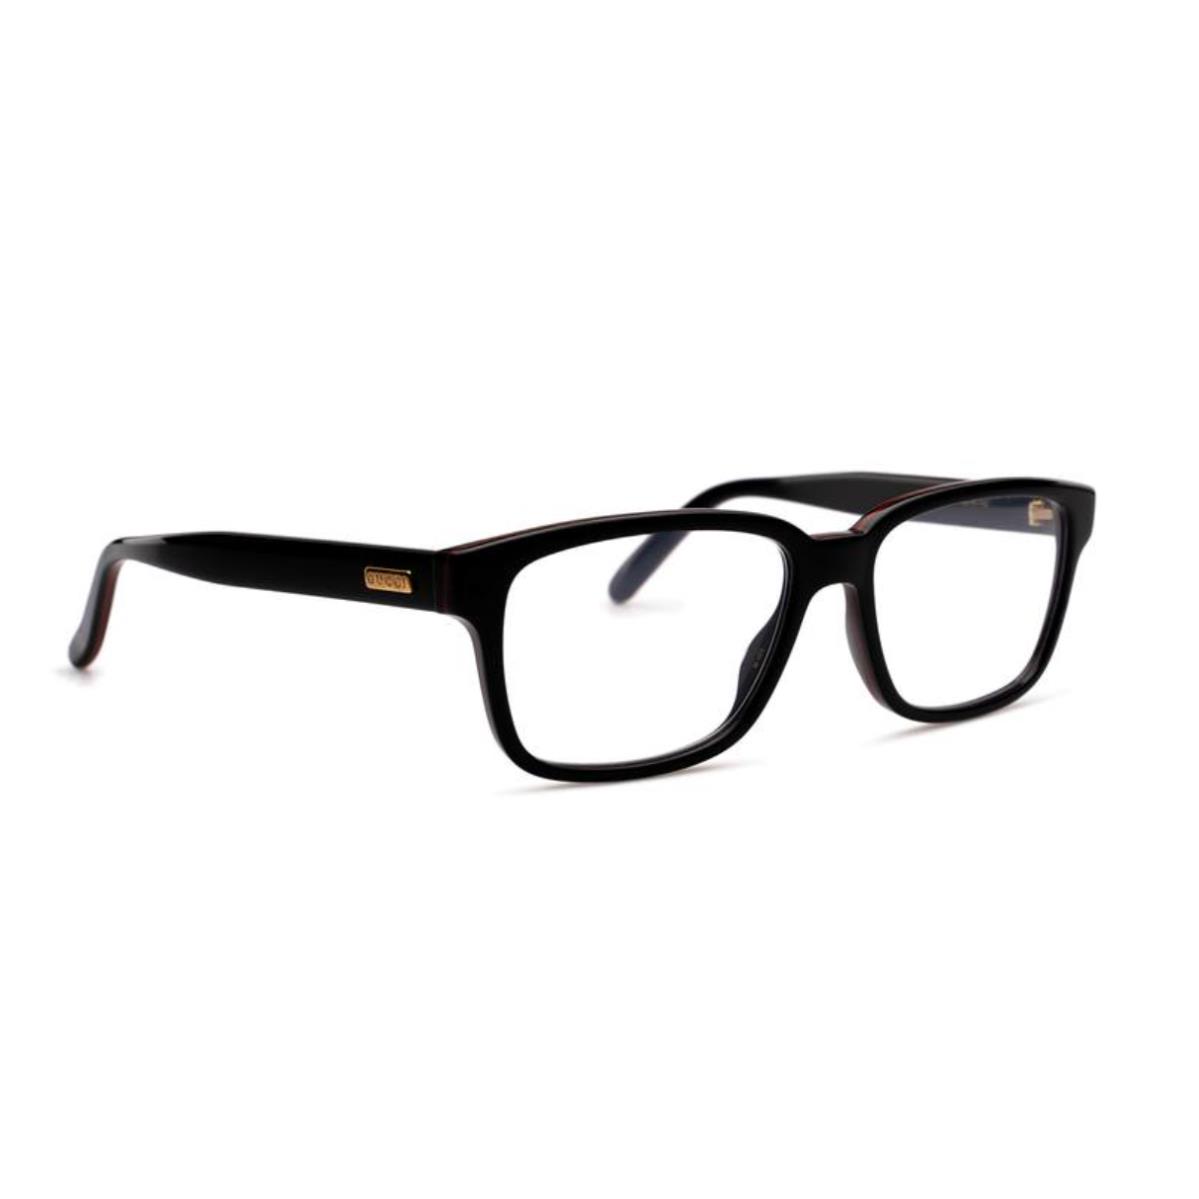 Gucci Eyeglasses GG0272O 001 53-16 145 Black Rectangular Frames W/gold Logos - Frame: Black & Red, Lens: